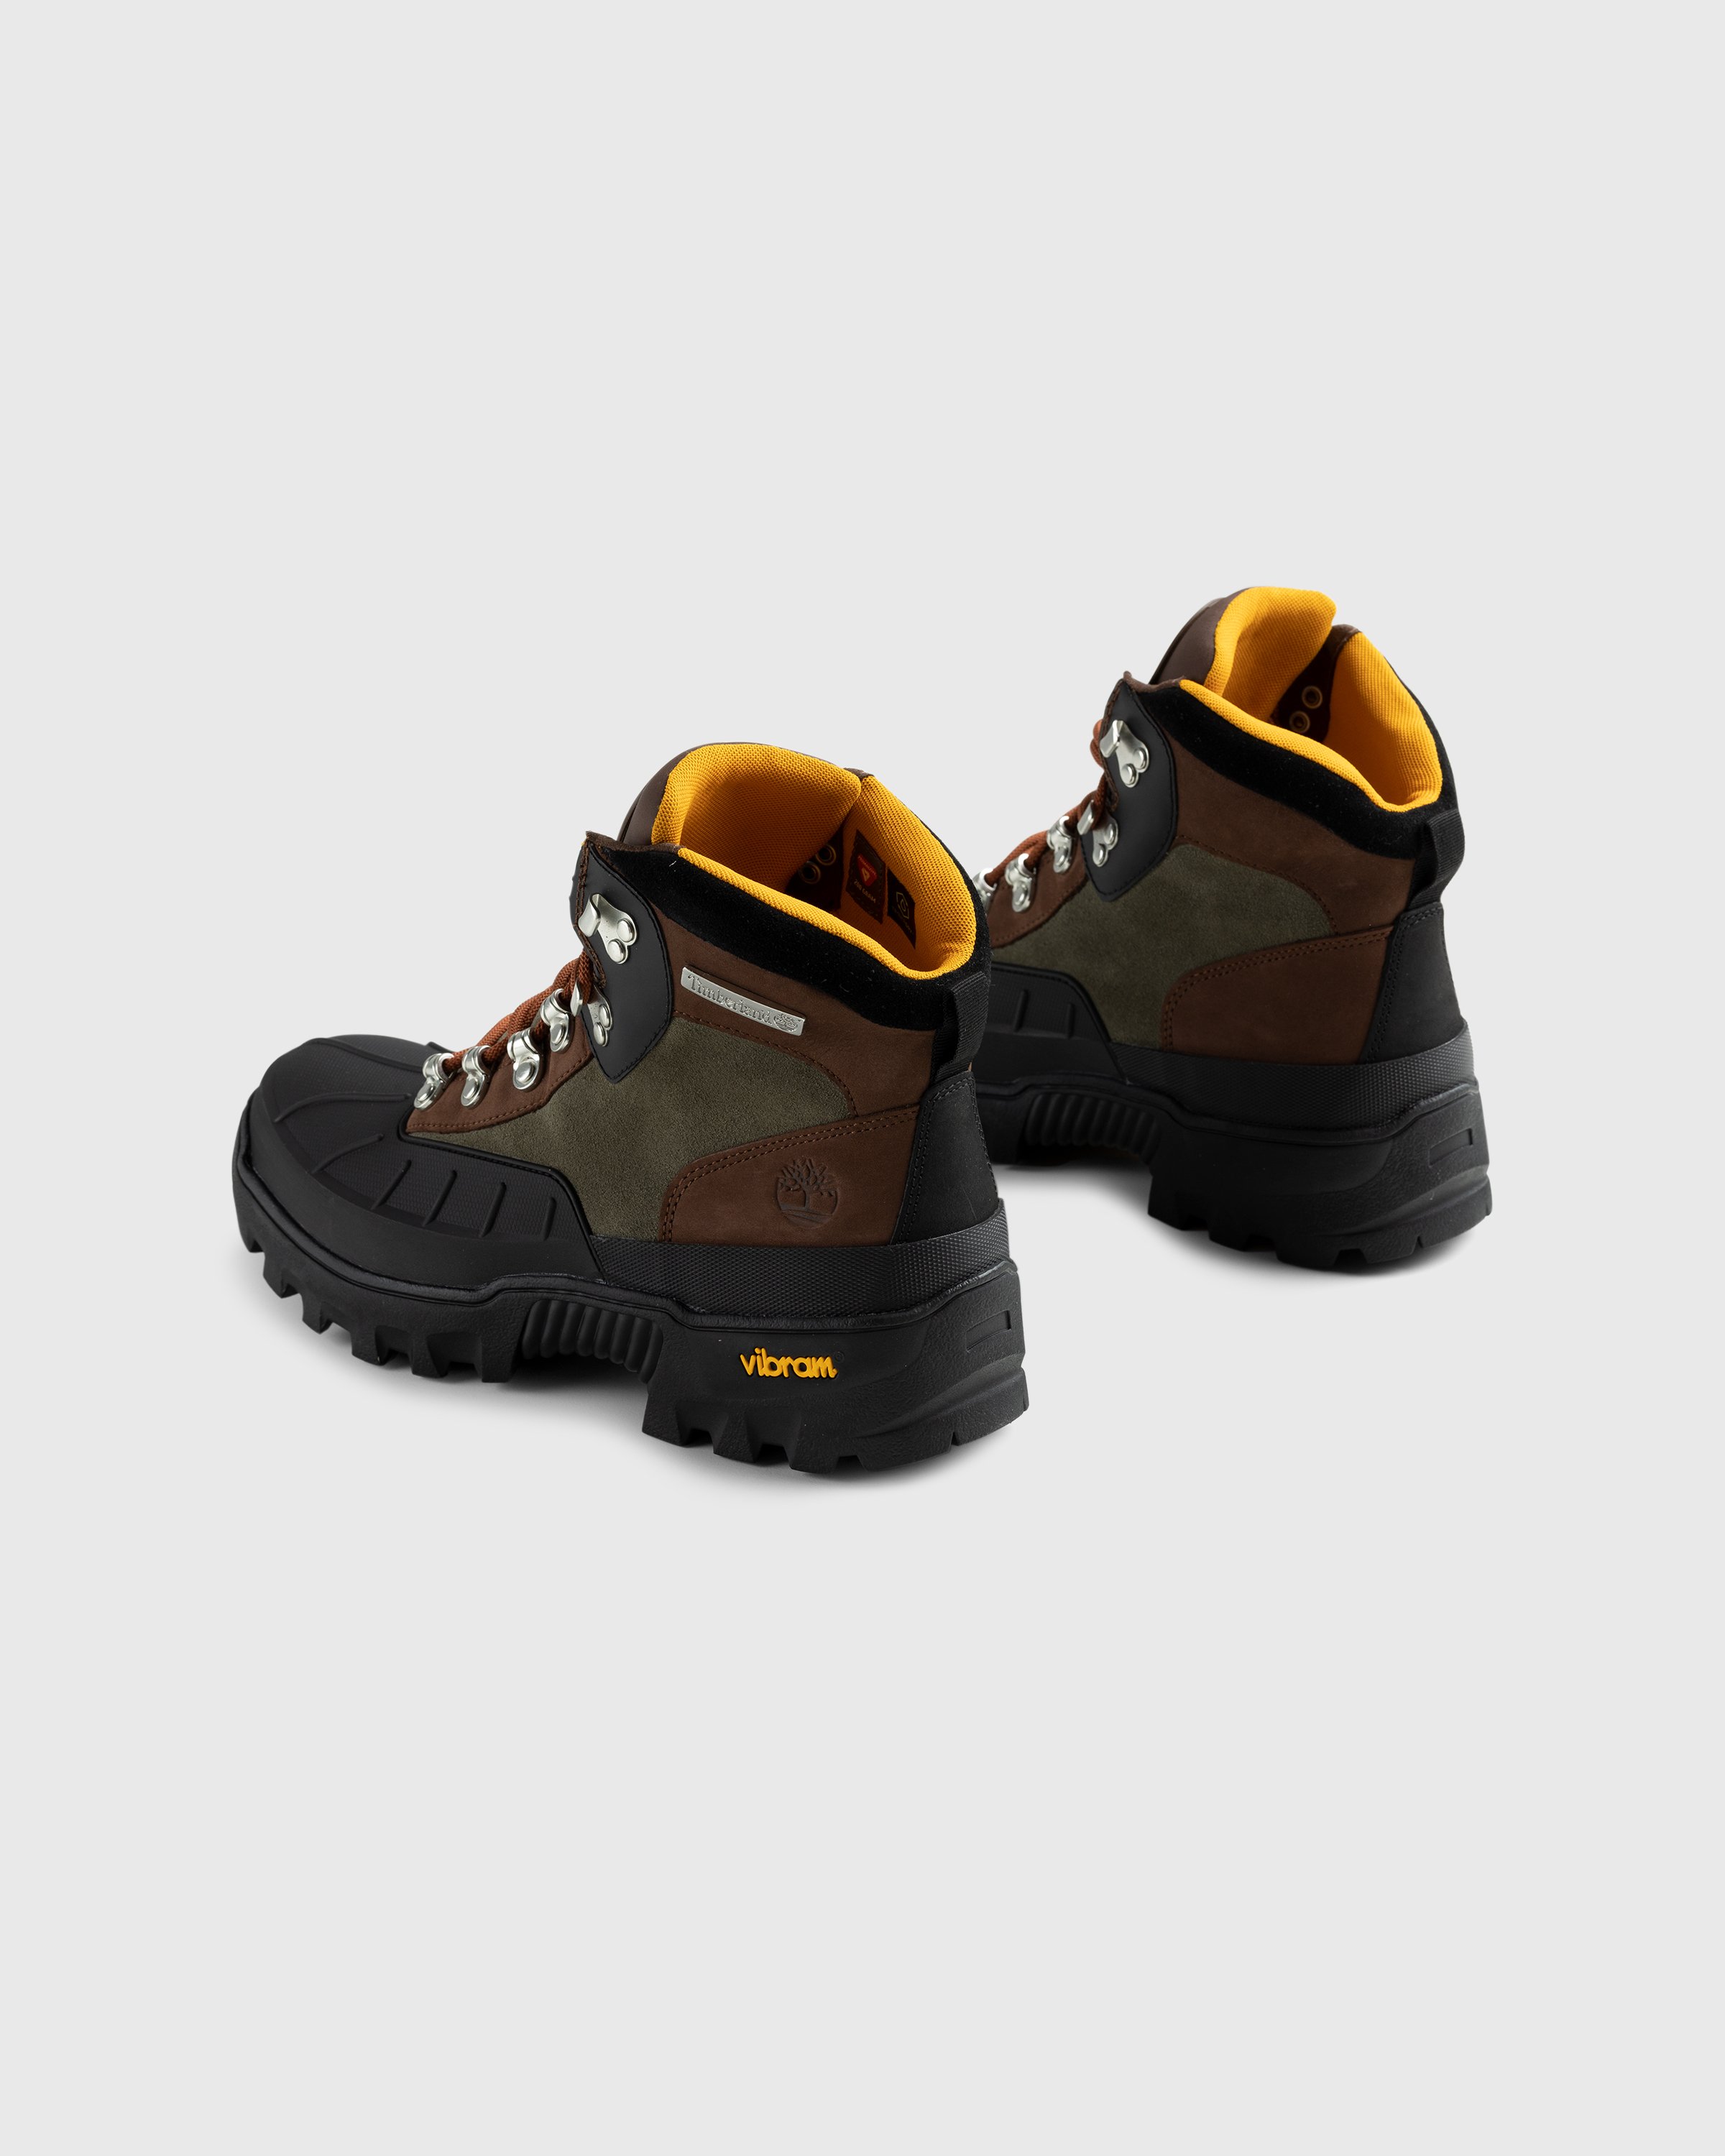 Timberland - Vibram Euro Hiker WP Potting Soil - Footwear - Brown - Image 4